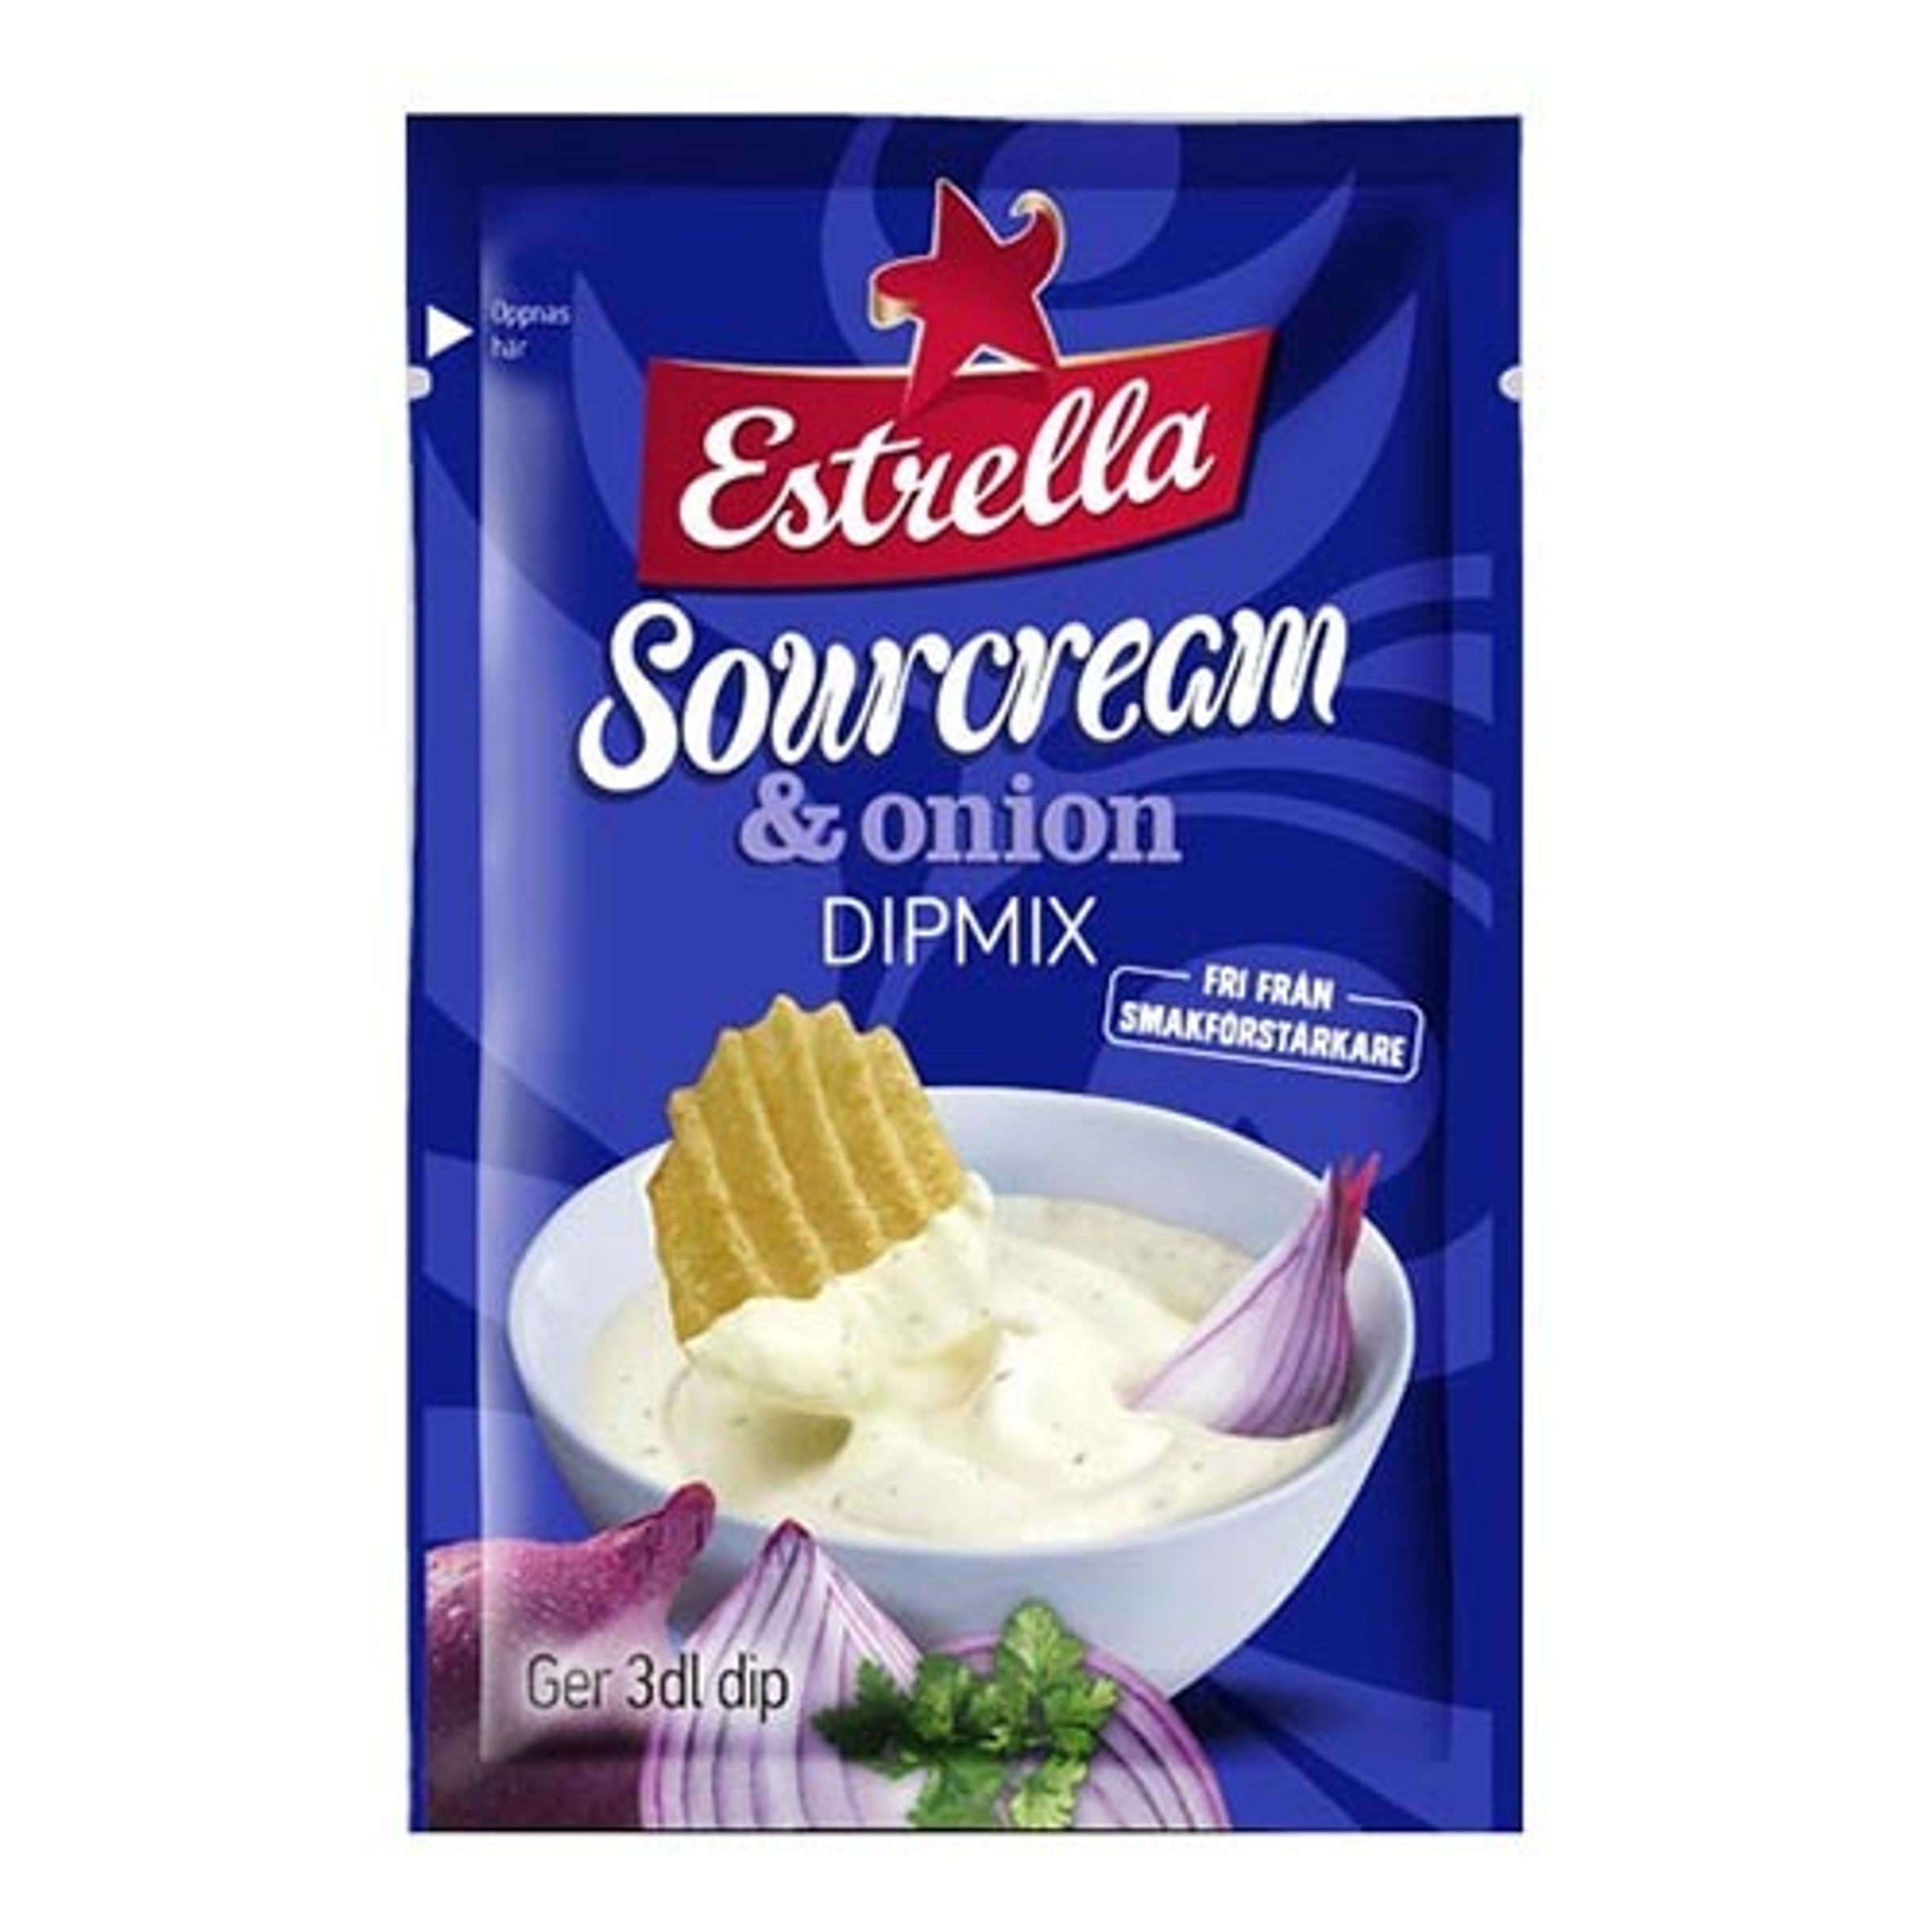 Estrella Dippmix Sourcream & Onion Storpack - 18-pack